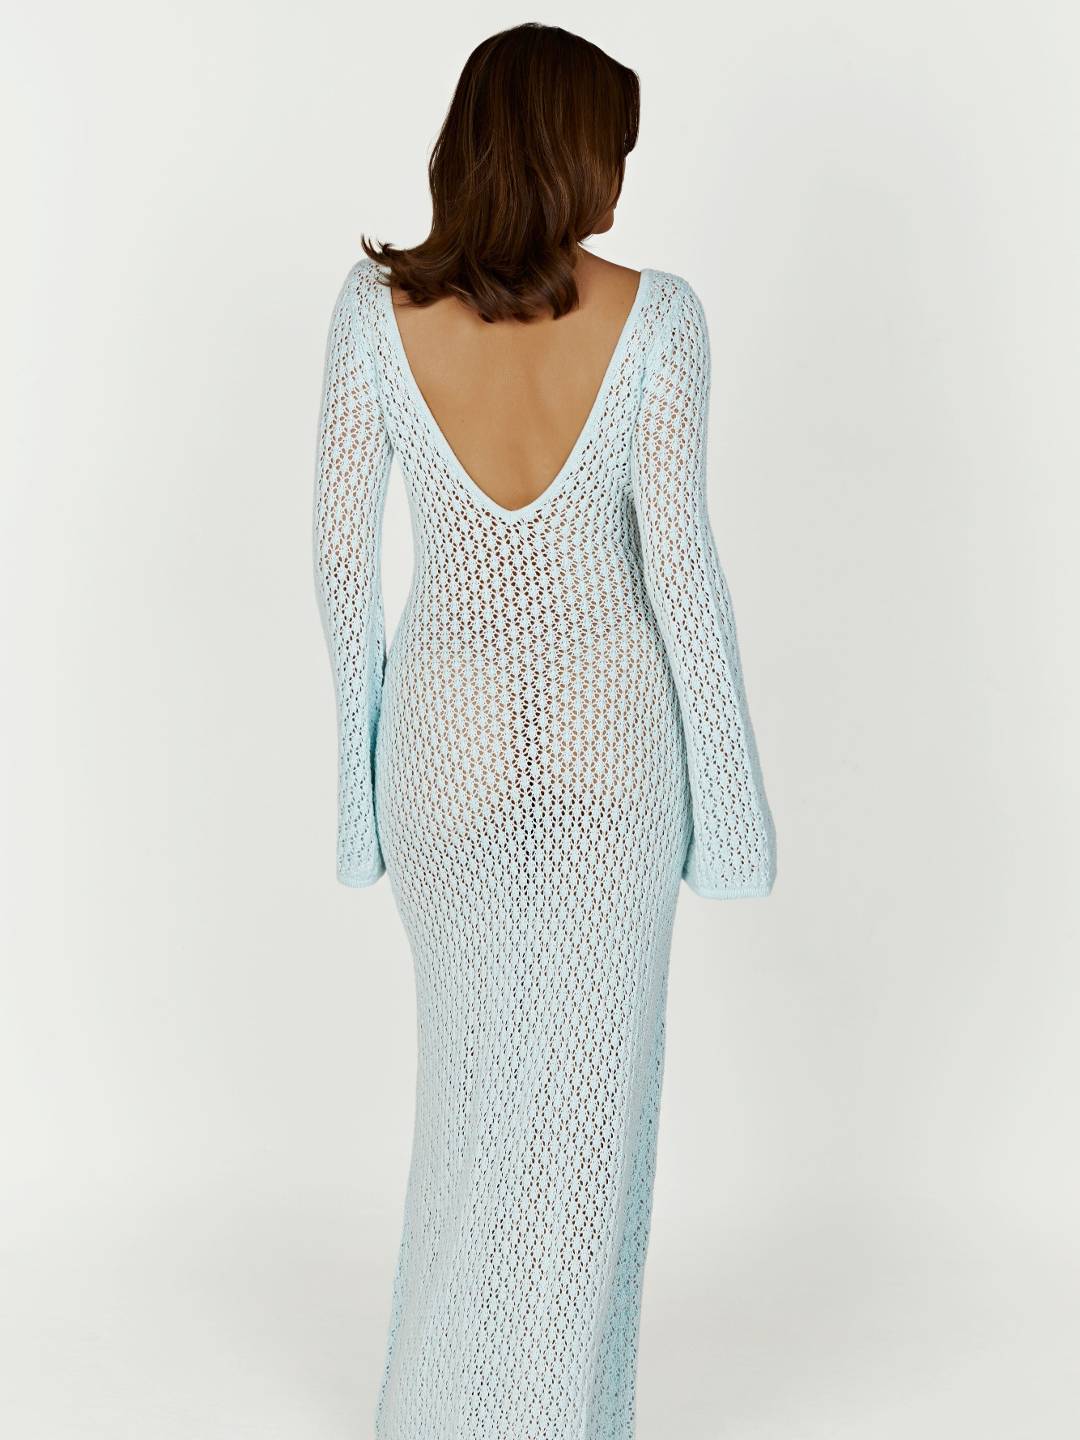 Viral Ocean Ripple Crochet Dress